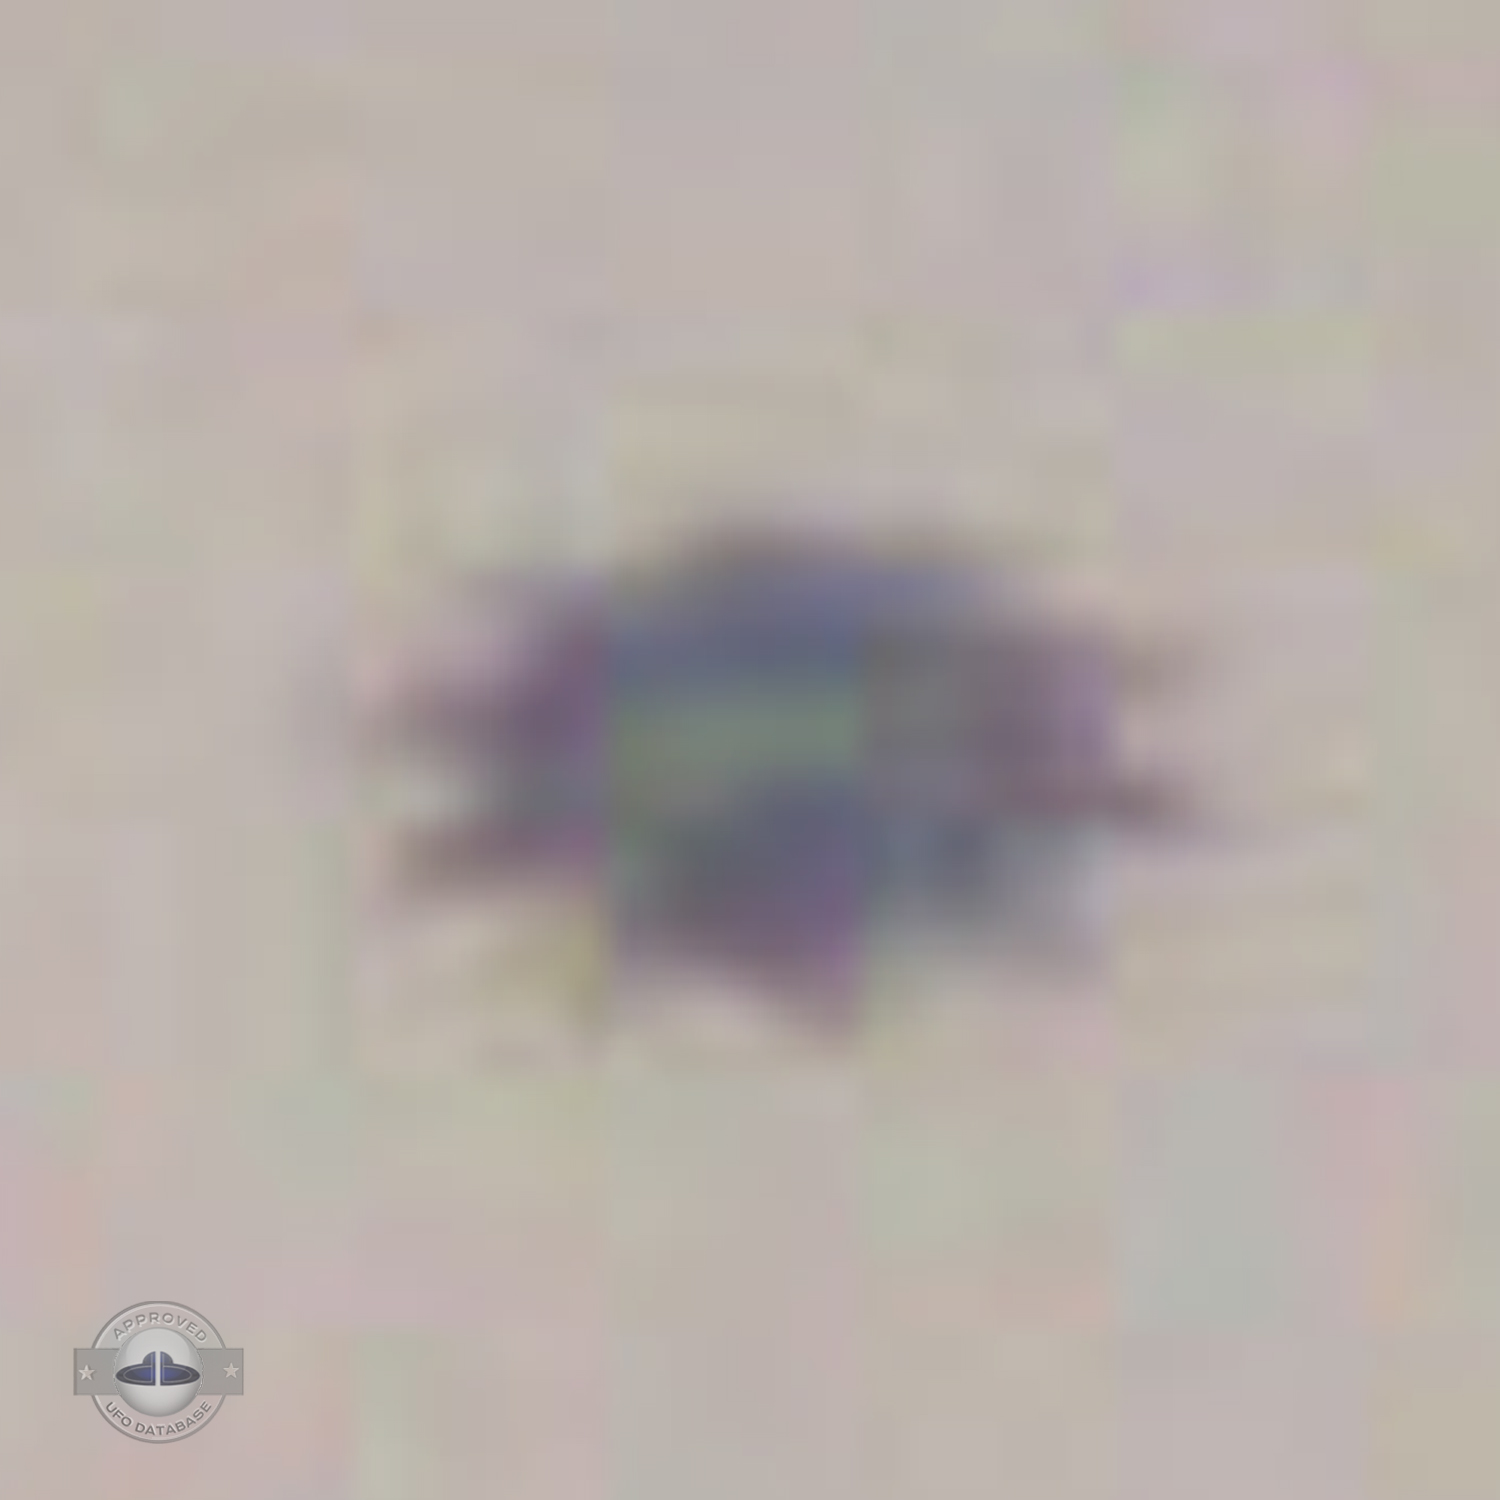 Very Rare UFO shaped like a Sprocket - Sao Bernardo Do Campo, Brazil UFO Picture #225-5